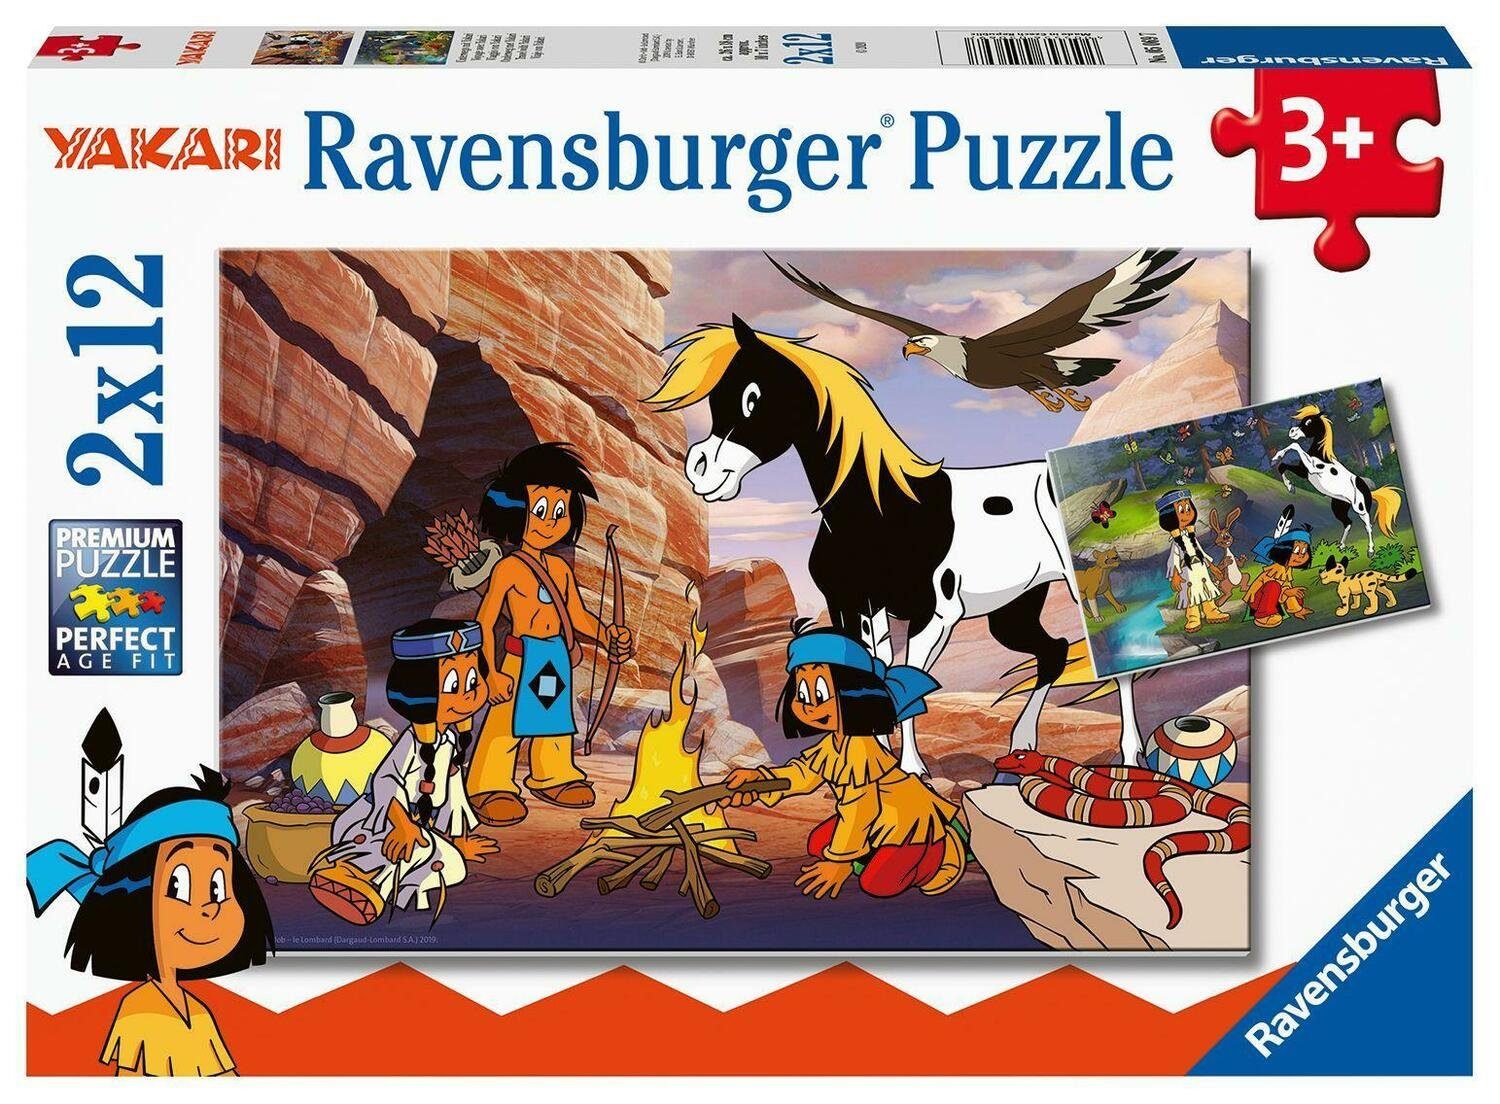 Ravensburger Puzzle Ravensburger Kinderpuzzle - 05069 Unterwegs mit Yakari - Puzzle für..., 12 Puzzleteile